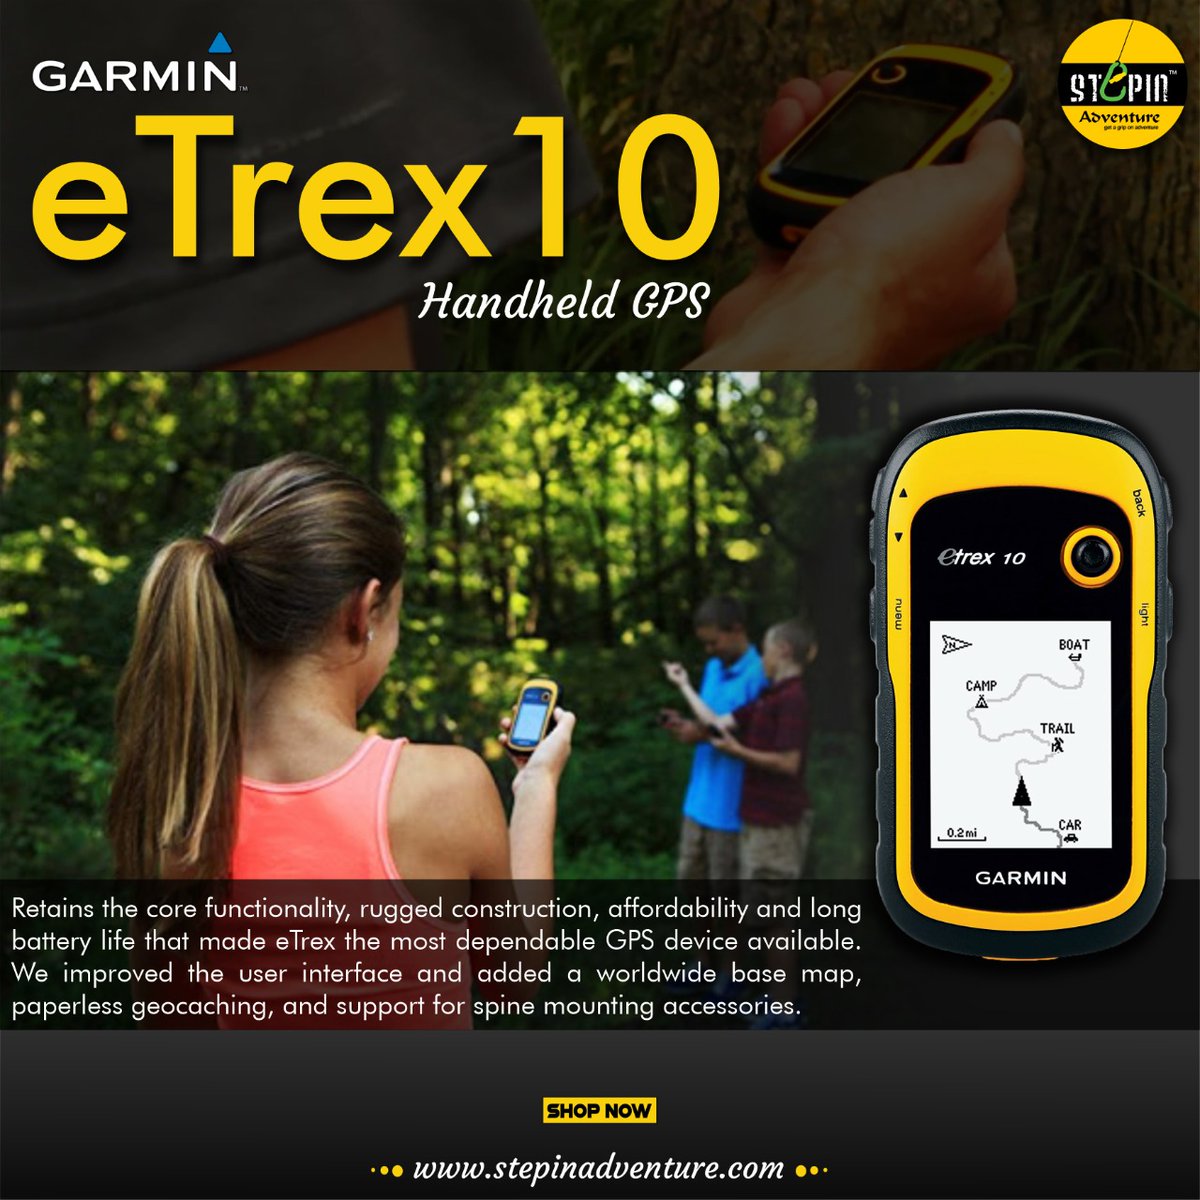 تويتر \ Stepin Adventure على تويتر: "Garmin eTrex 10 Handheld GPS is a  basic, easy to use GPS unit perfect for geocaching, hunting or hiking.  https://t.co/V3rxX5prwV #garmin #etrex #buynow #stepinadventure #gooutdoors  #trekking #